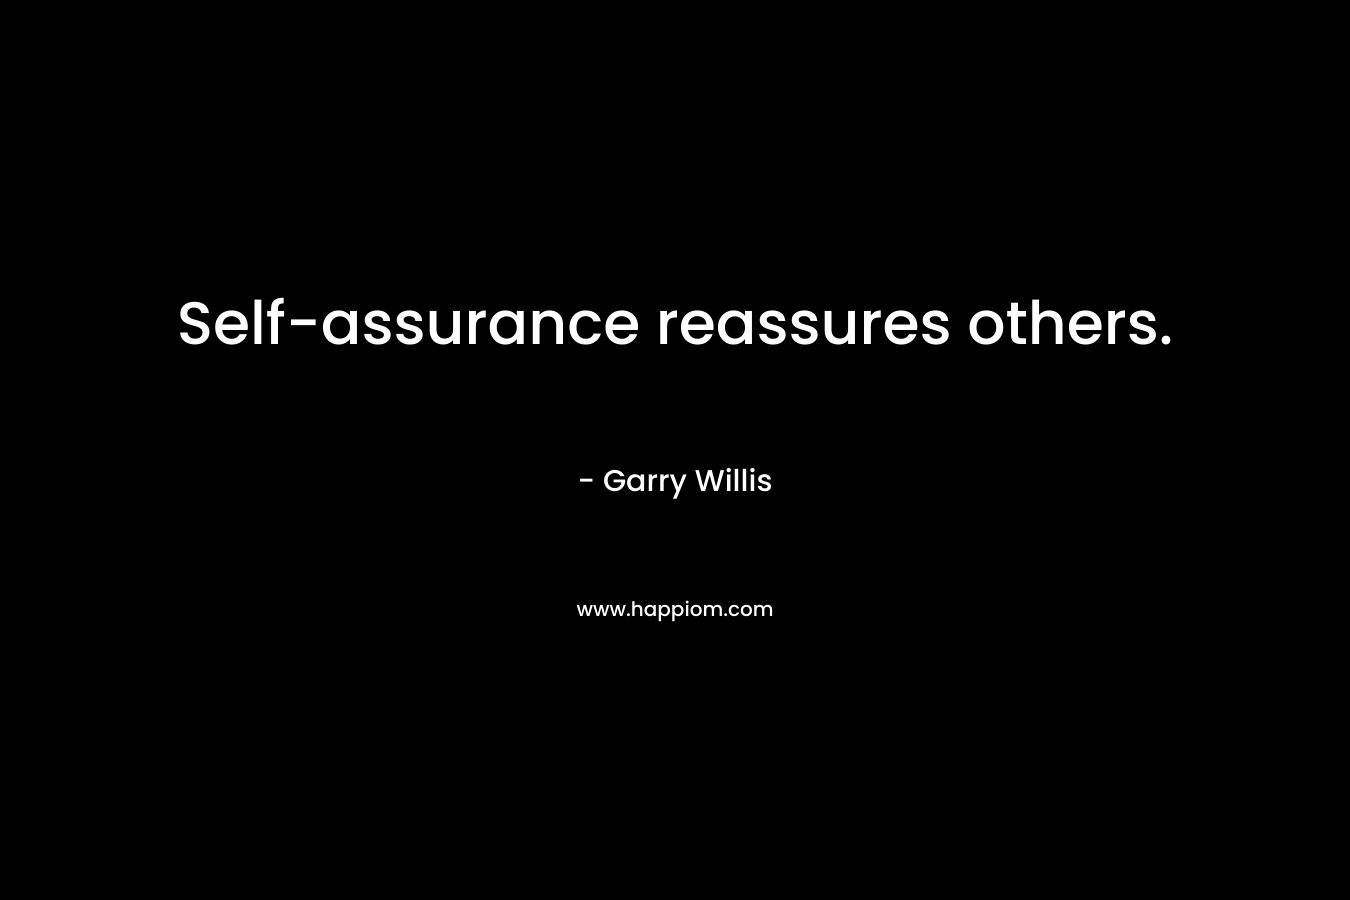 Self-assurance reassures others. – Garry Willis